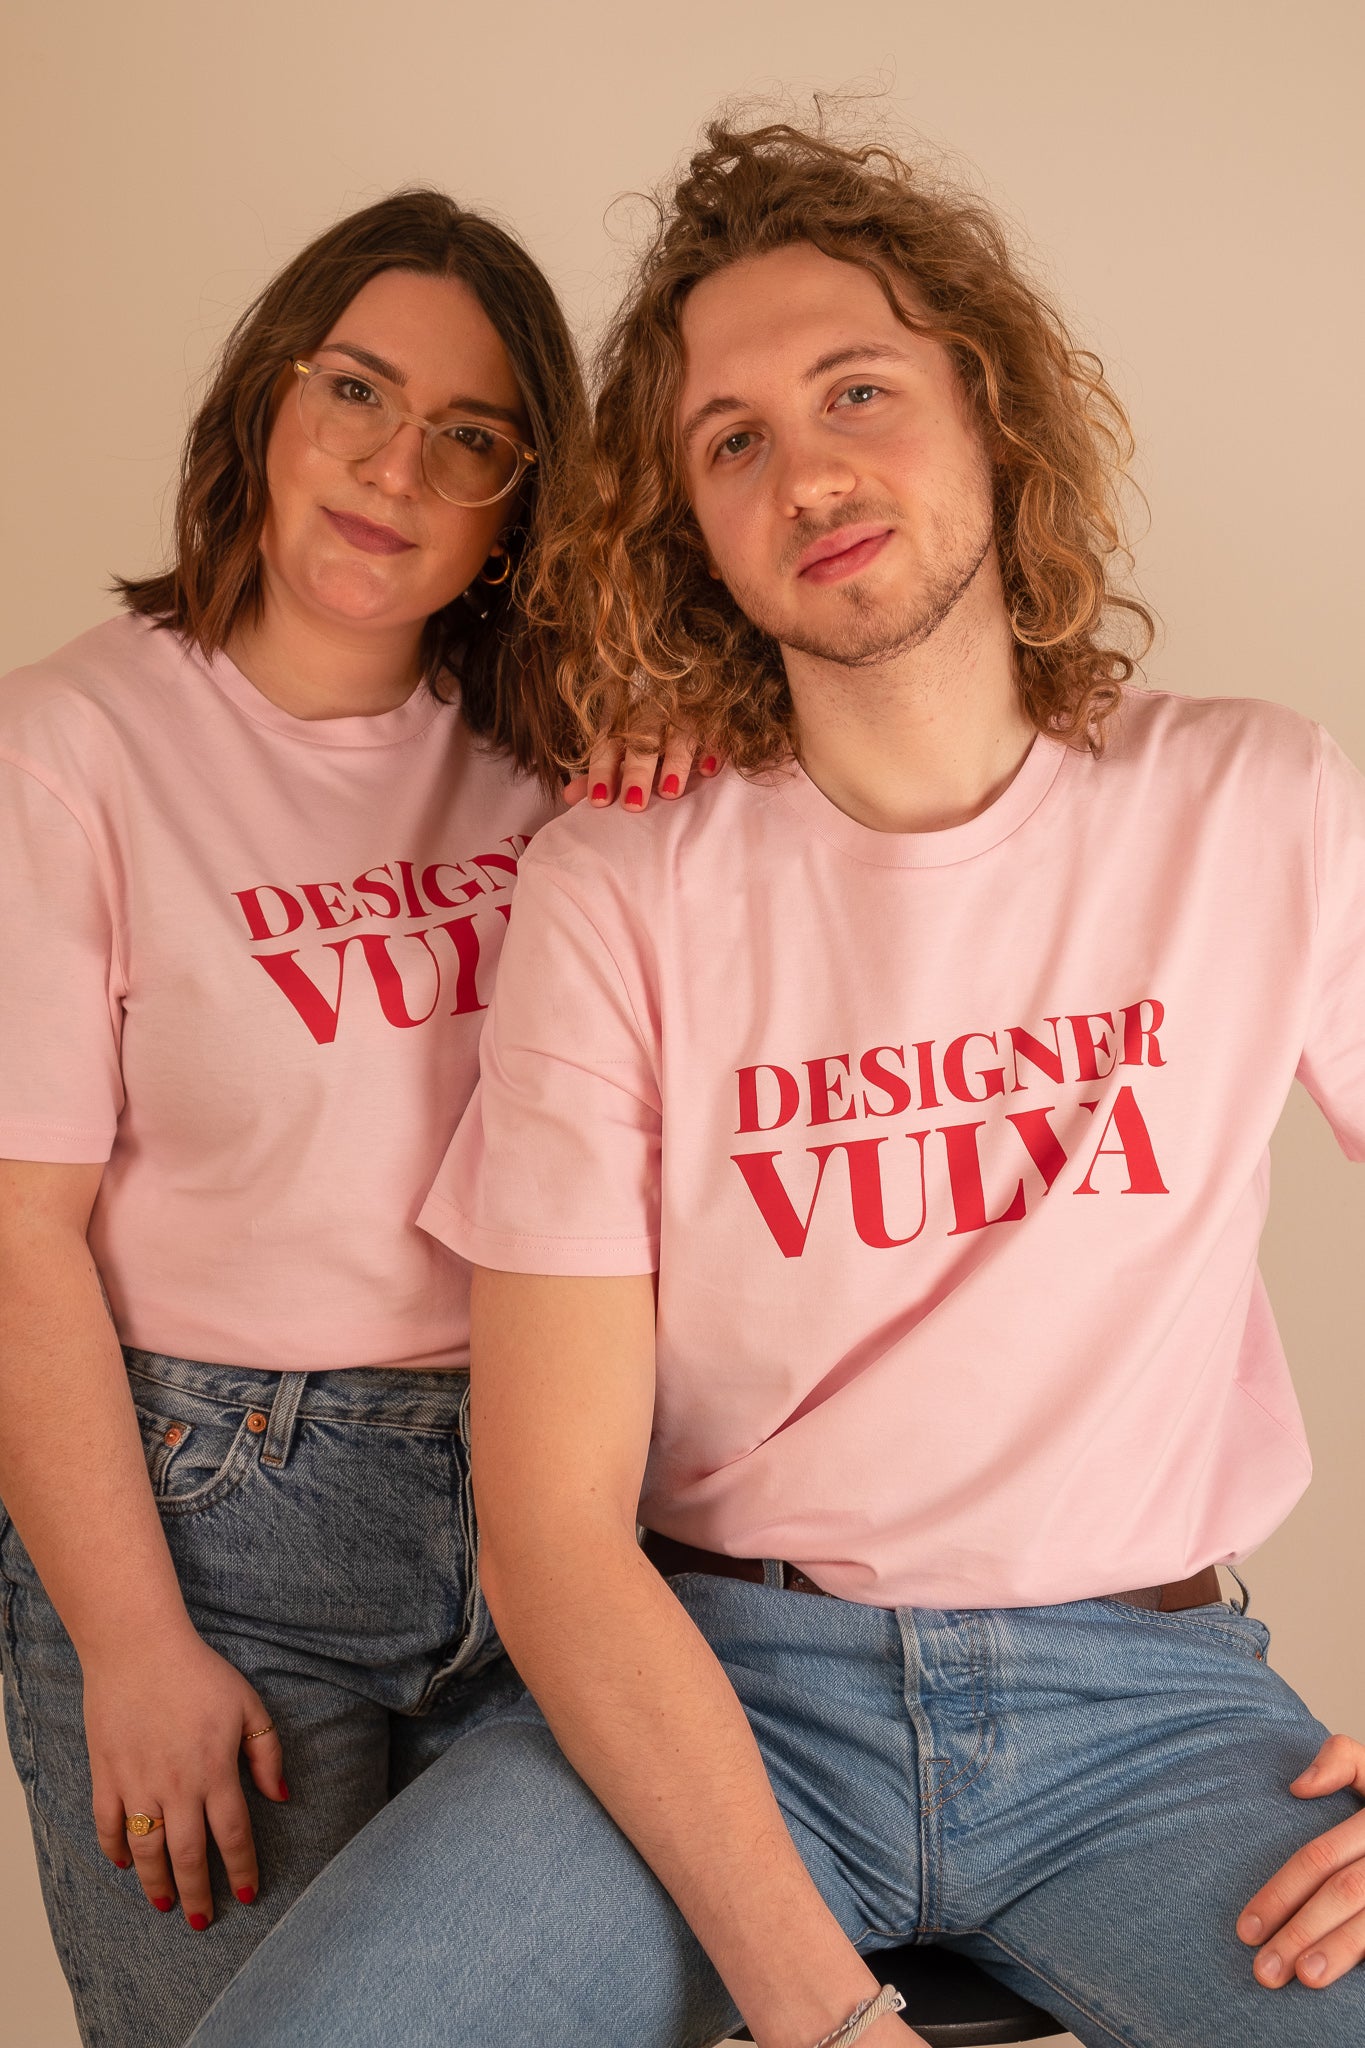 Designer Vulva | Unisex Shirt - Vulva Shop